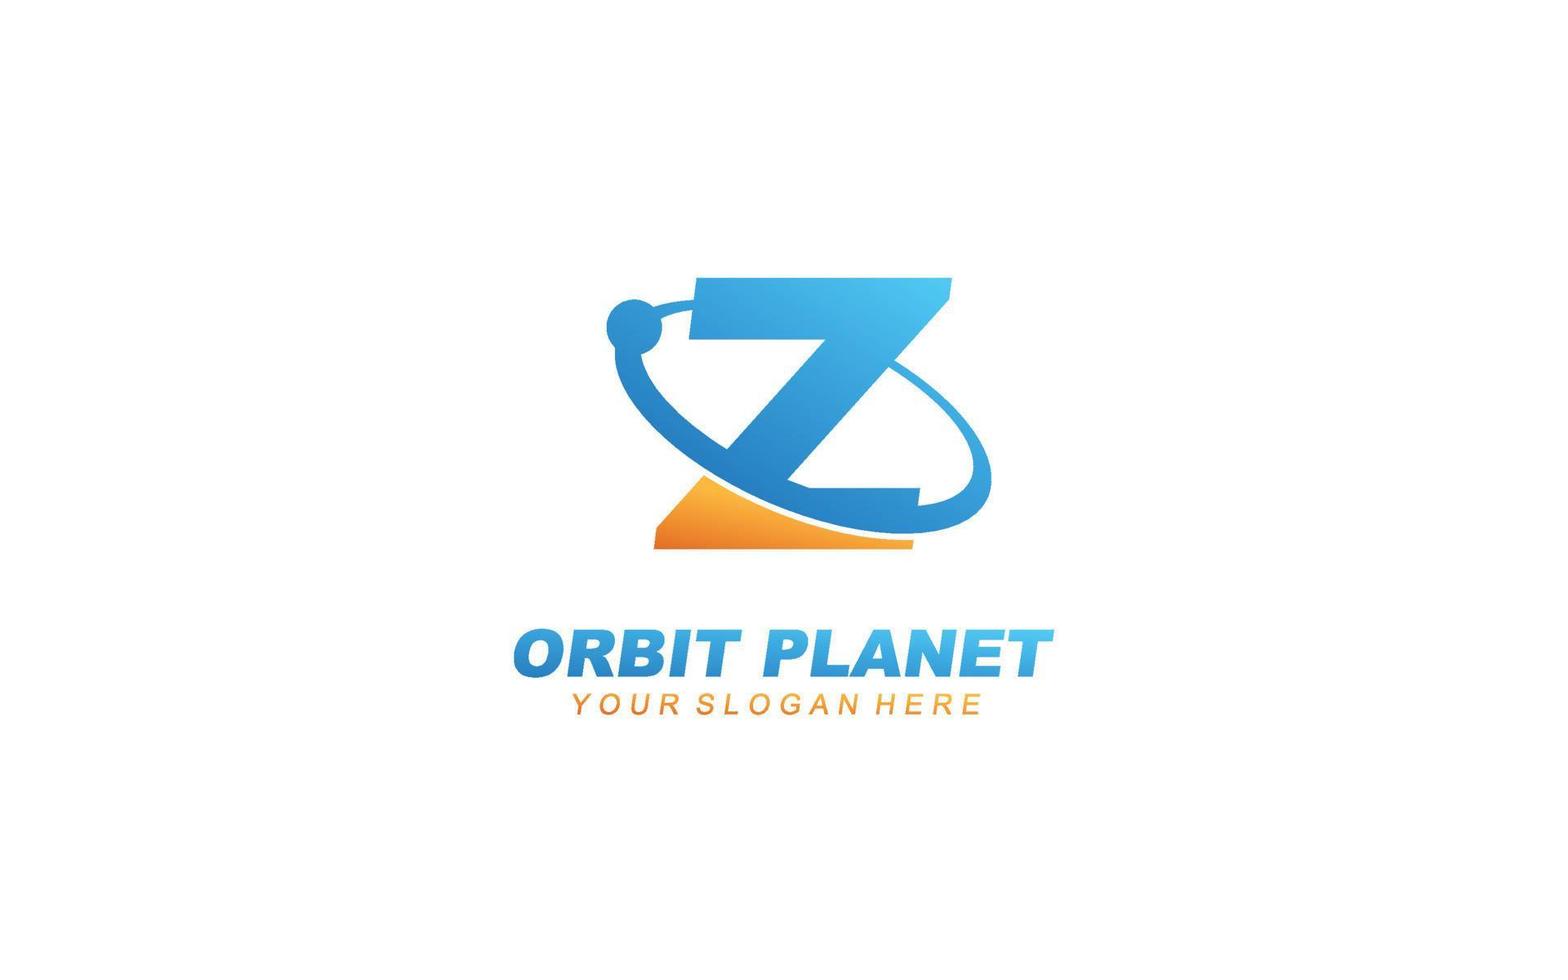 Z planet logo design inspiration. Vector letter template design for brand.